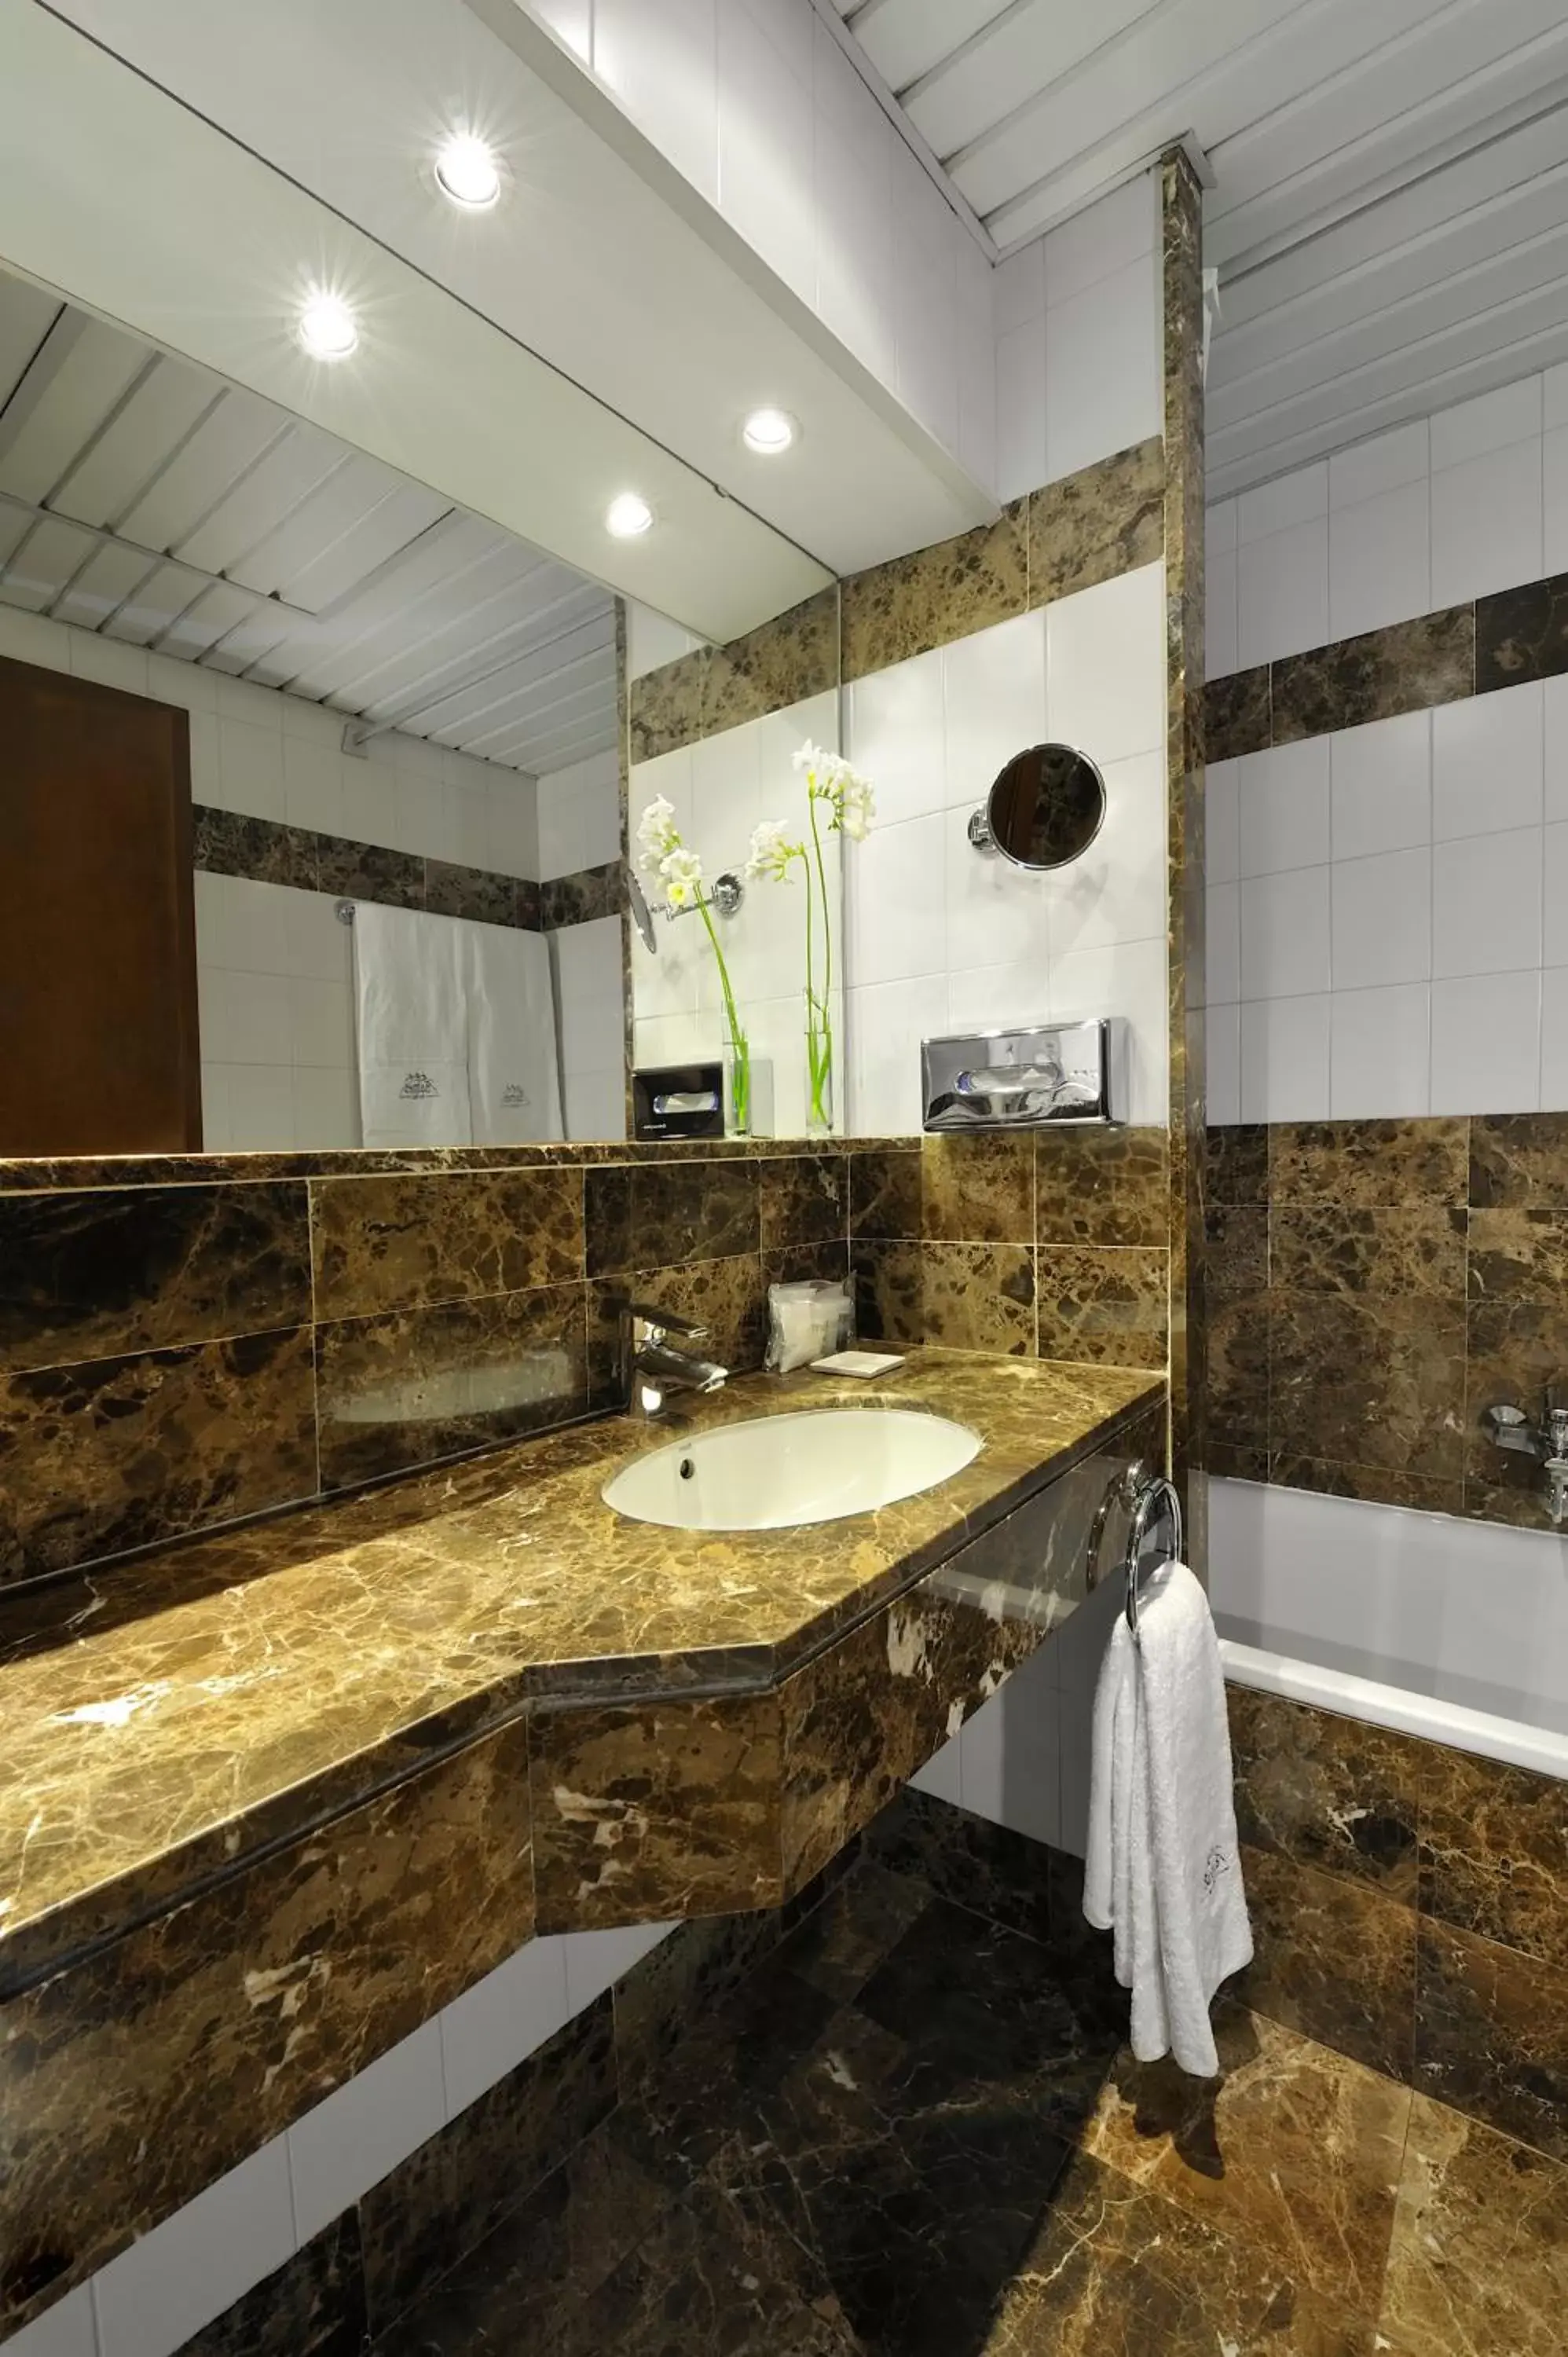 Bathroom in Hotel Balmes, a member of Preferred Hotels & Resorts